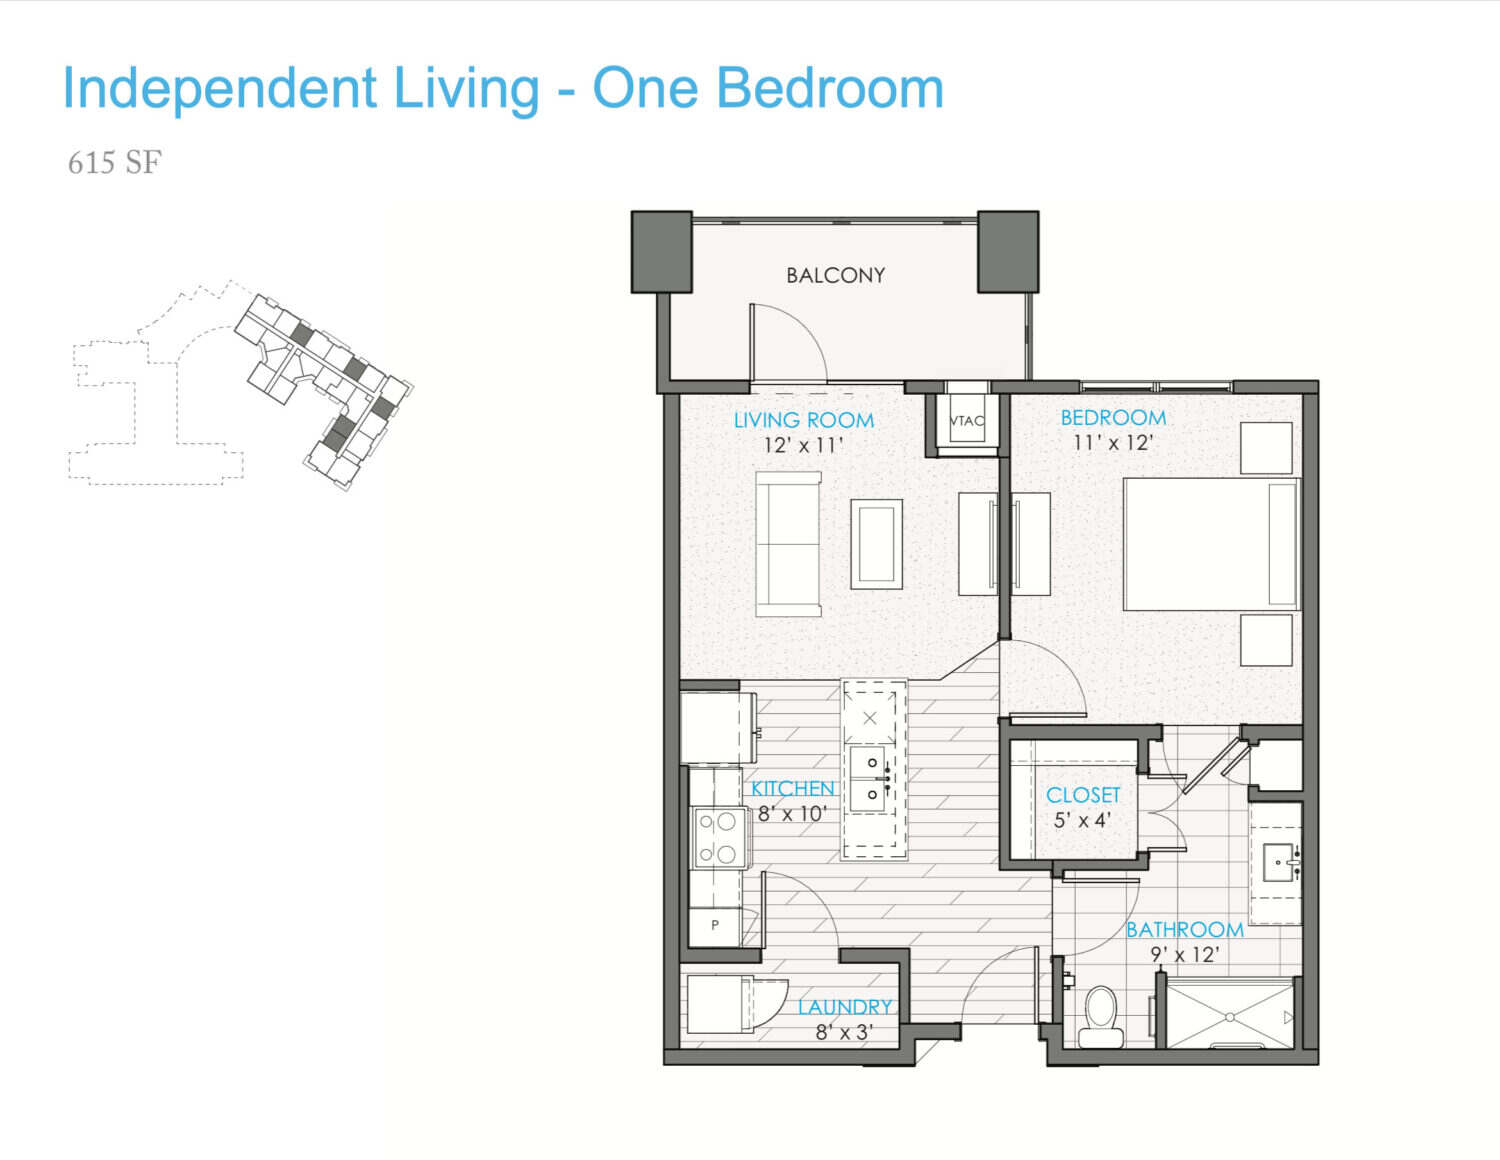 Independent Living One Bedroom